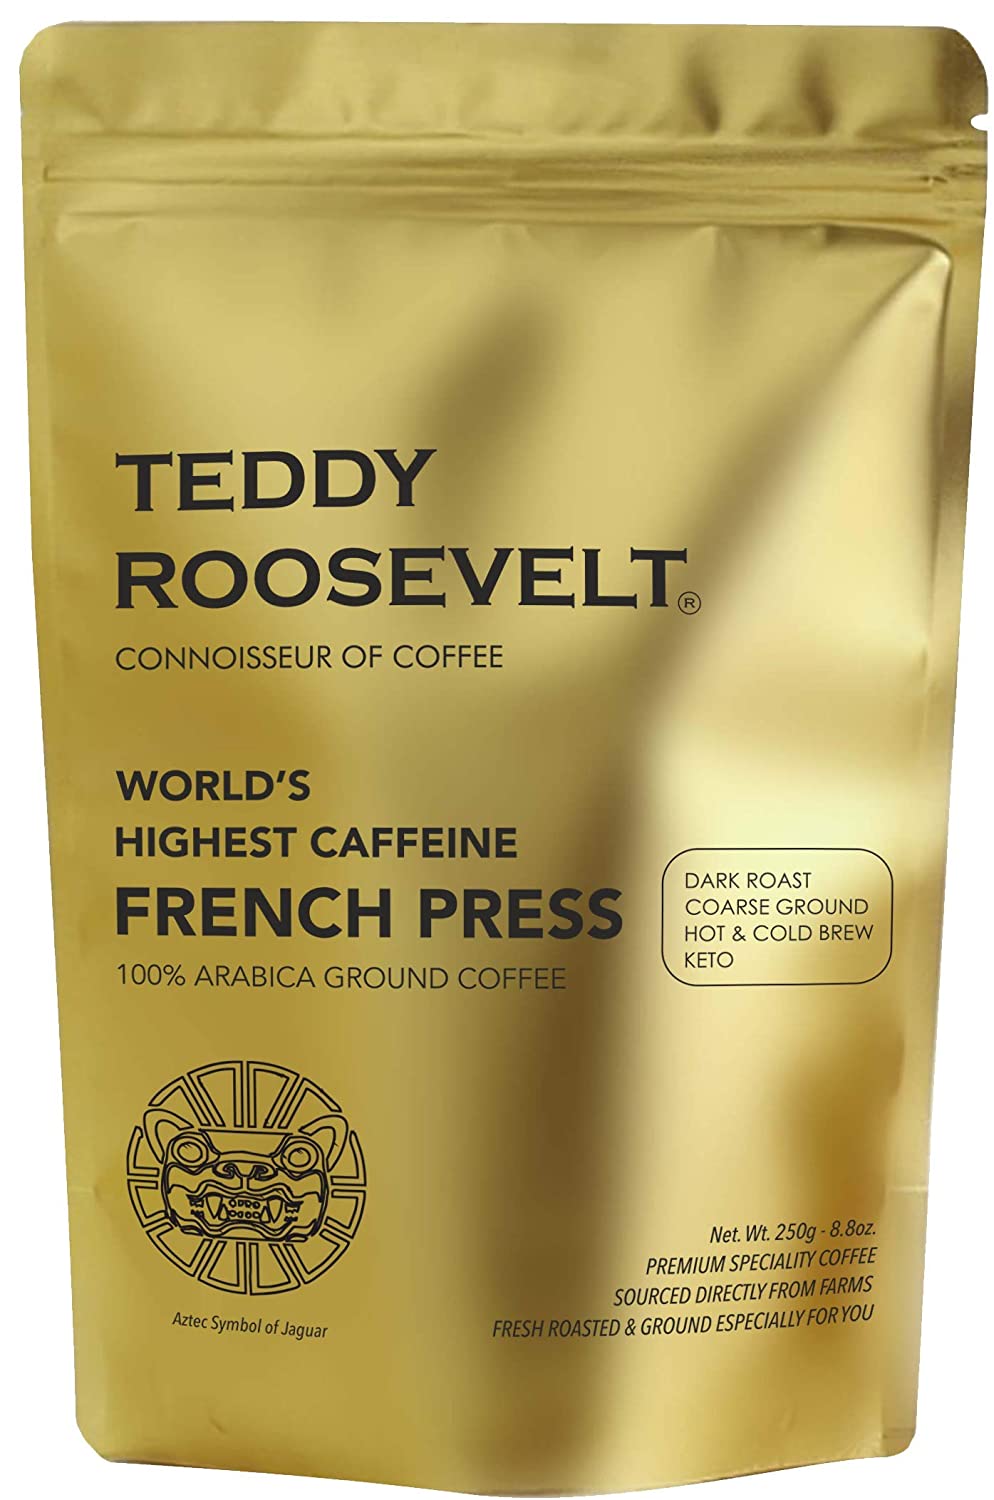 Teddy Roosevelt High Caffeine French Press Coffee Powder, Arabica Dark Roast Coarse Ground, 250g